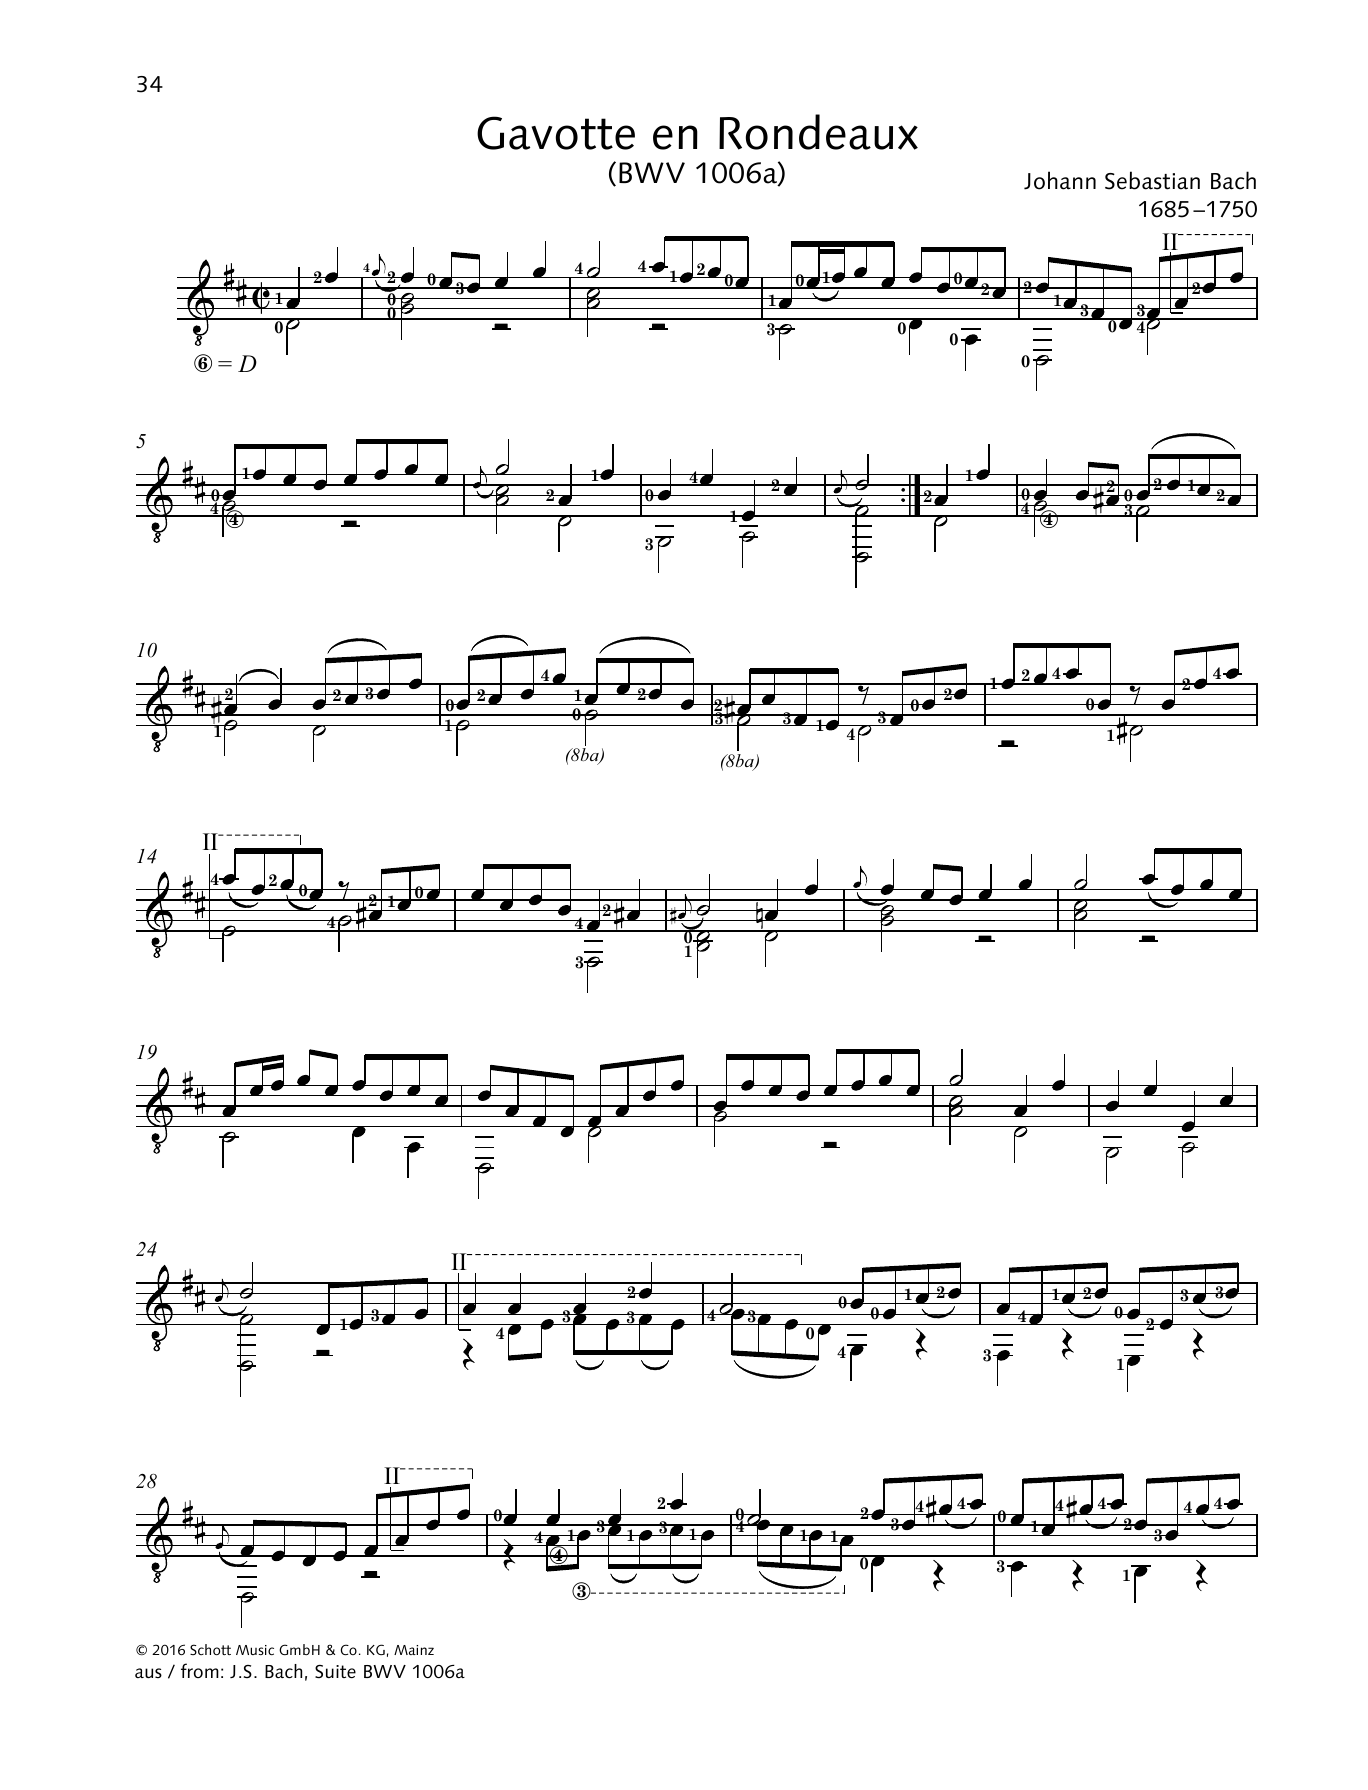 Download Johann Sebastian Bach Gavotte en Rondeaux Sheet Music and learn how to play Solo Guitar PDF digital score in minutes